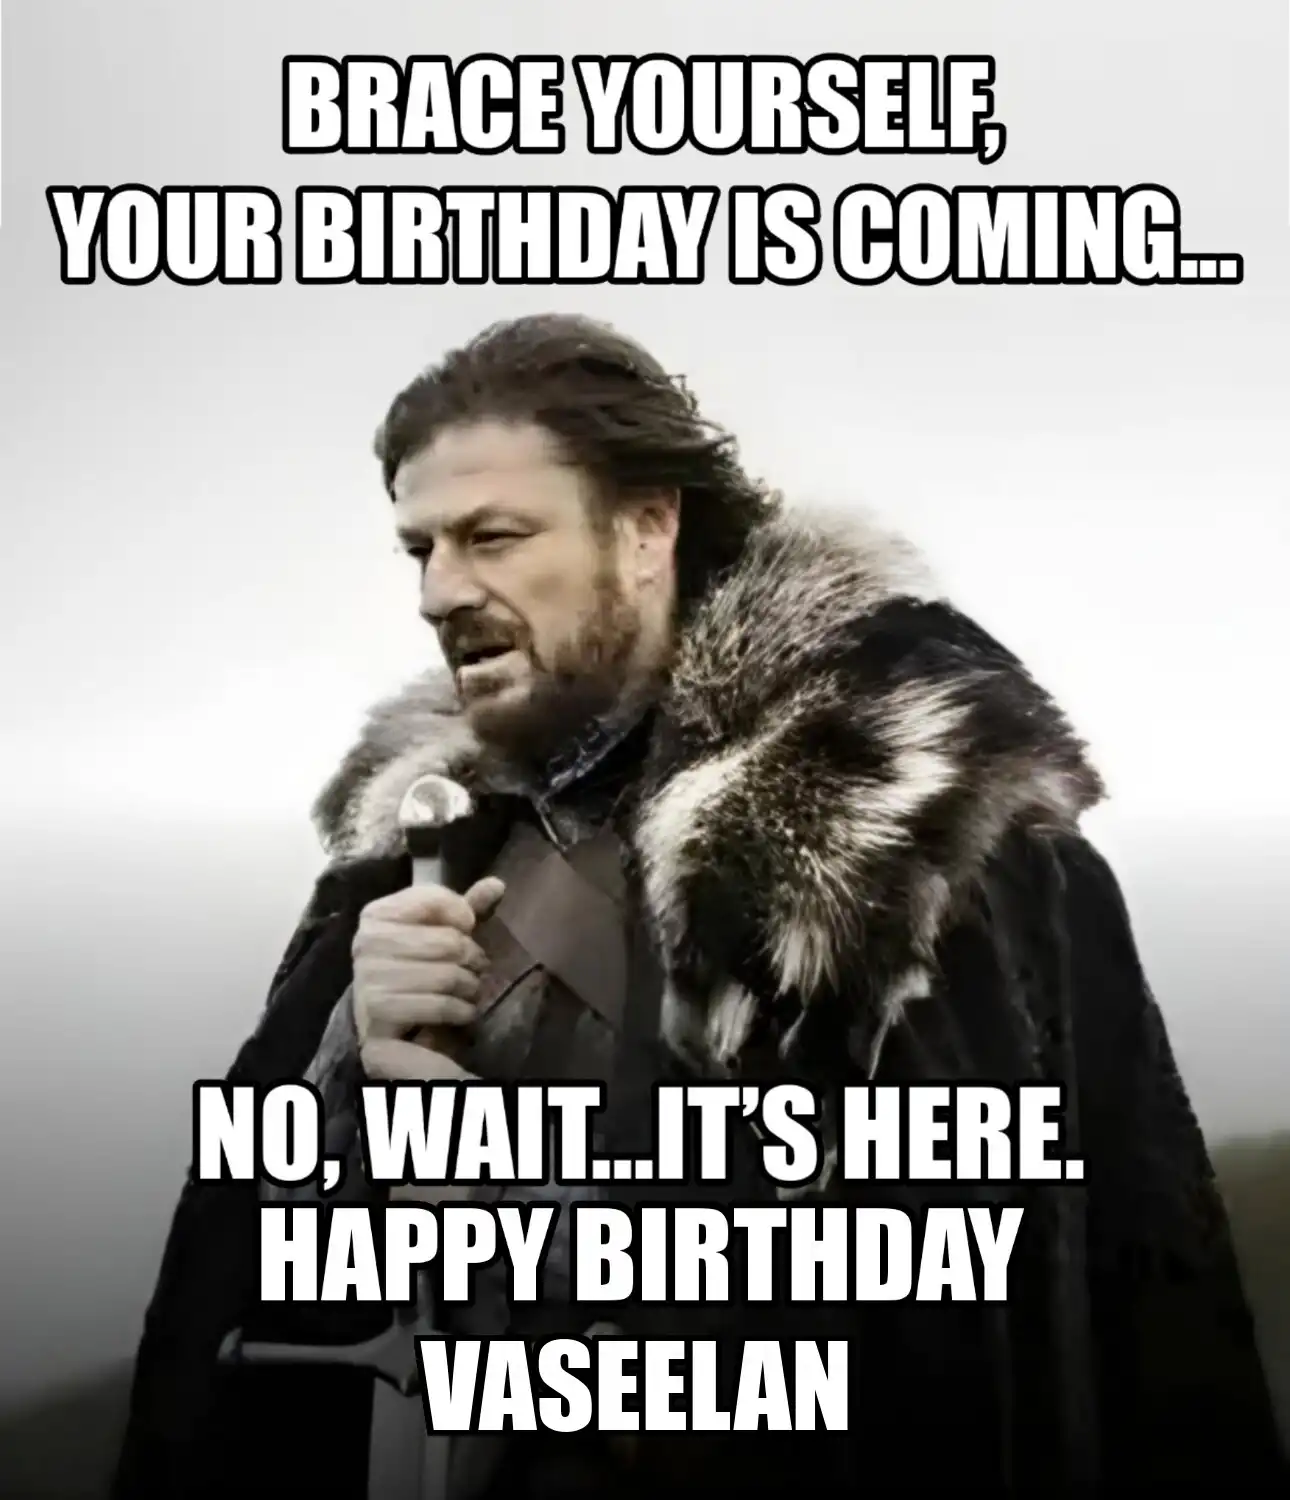 Happy Birthday Vaseelan Brace Yourself Your Birthday Is Coming Meme